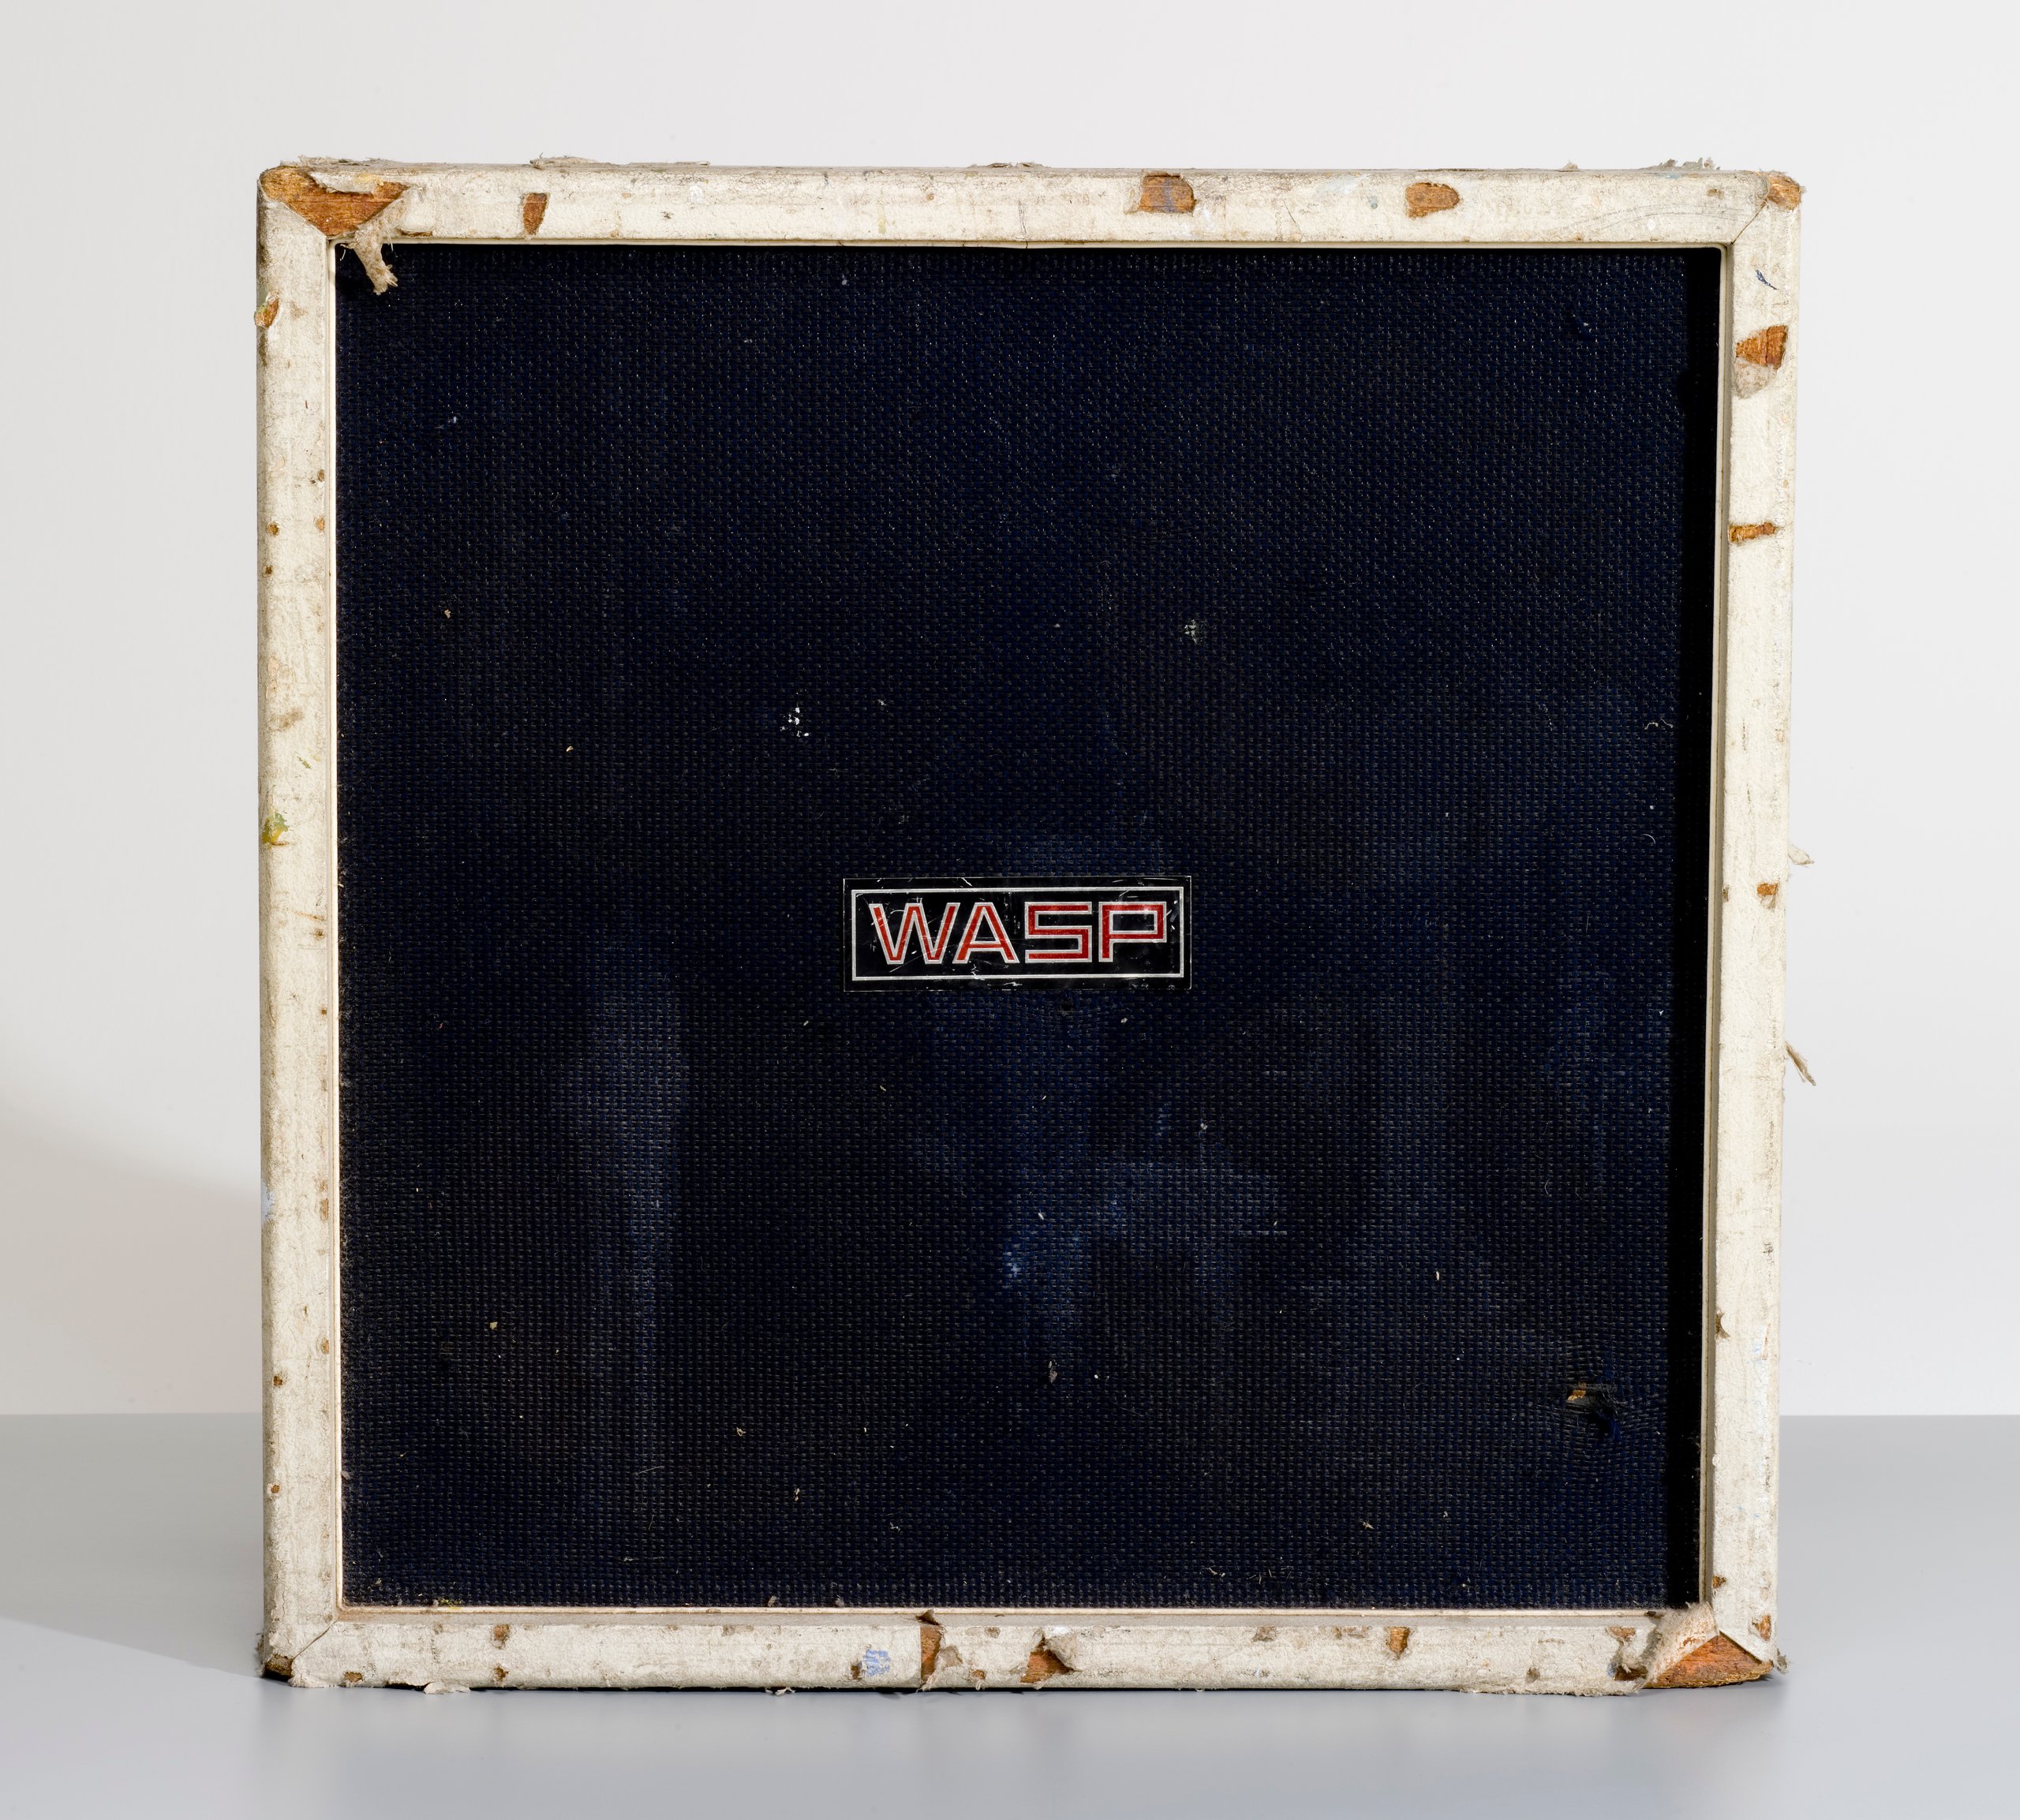 Wasp speaker box used by Radio Birdman